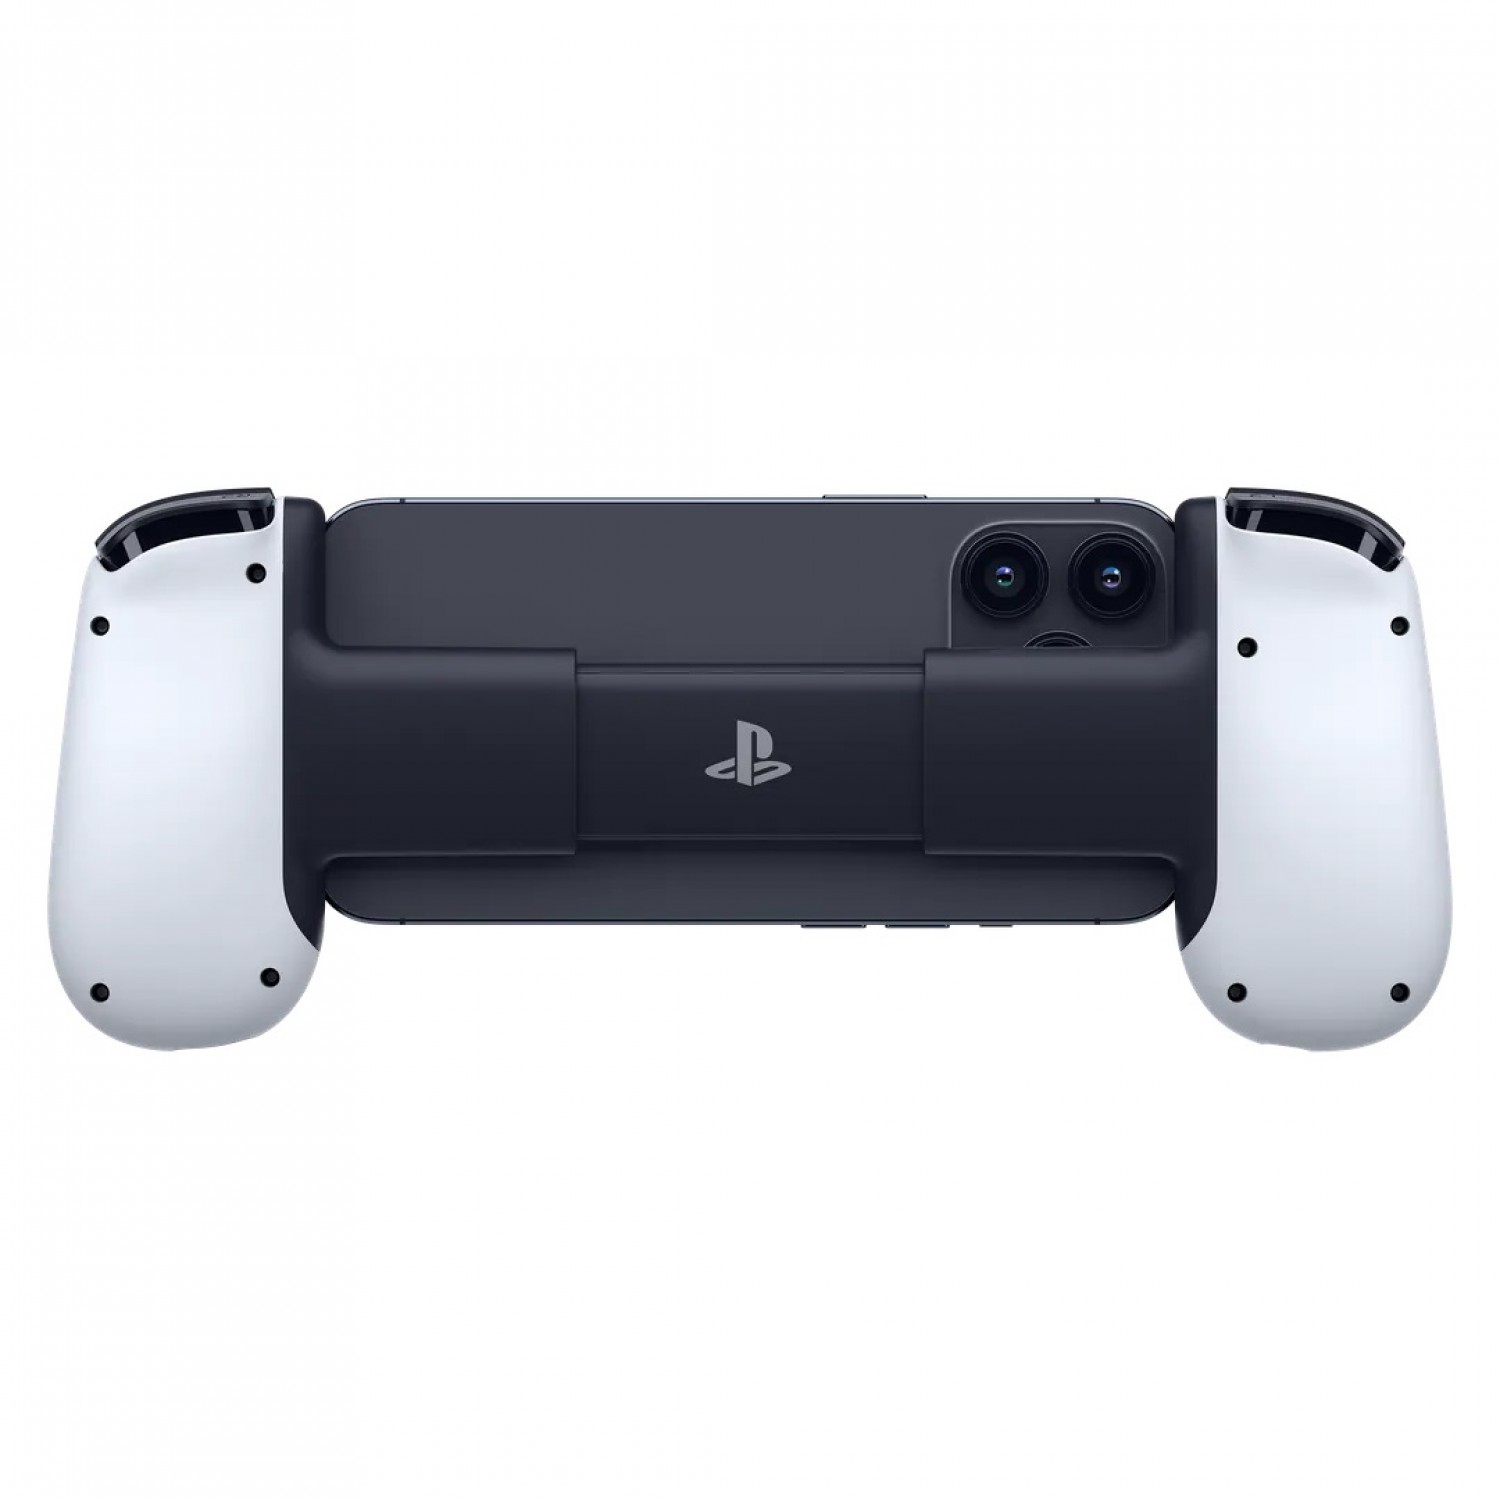 دسته بازی موبایل Backbone One for IPhone - Playstation Edition-2